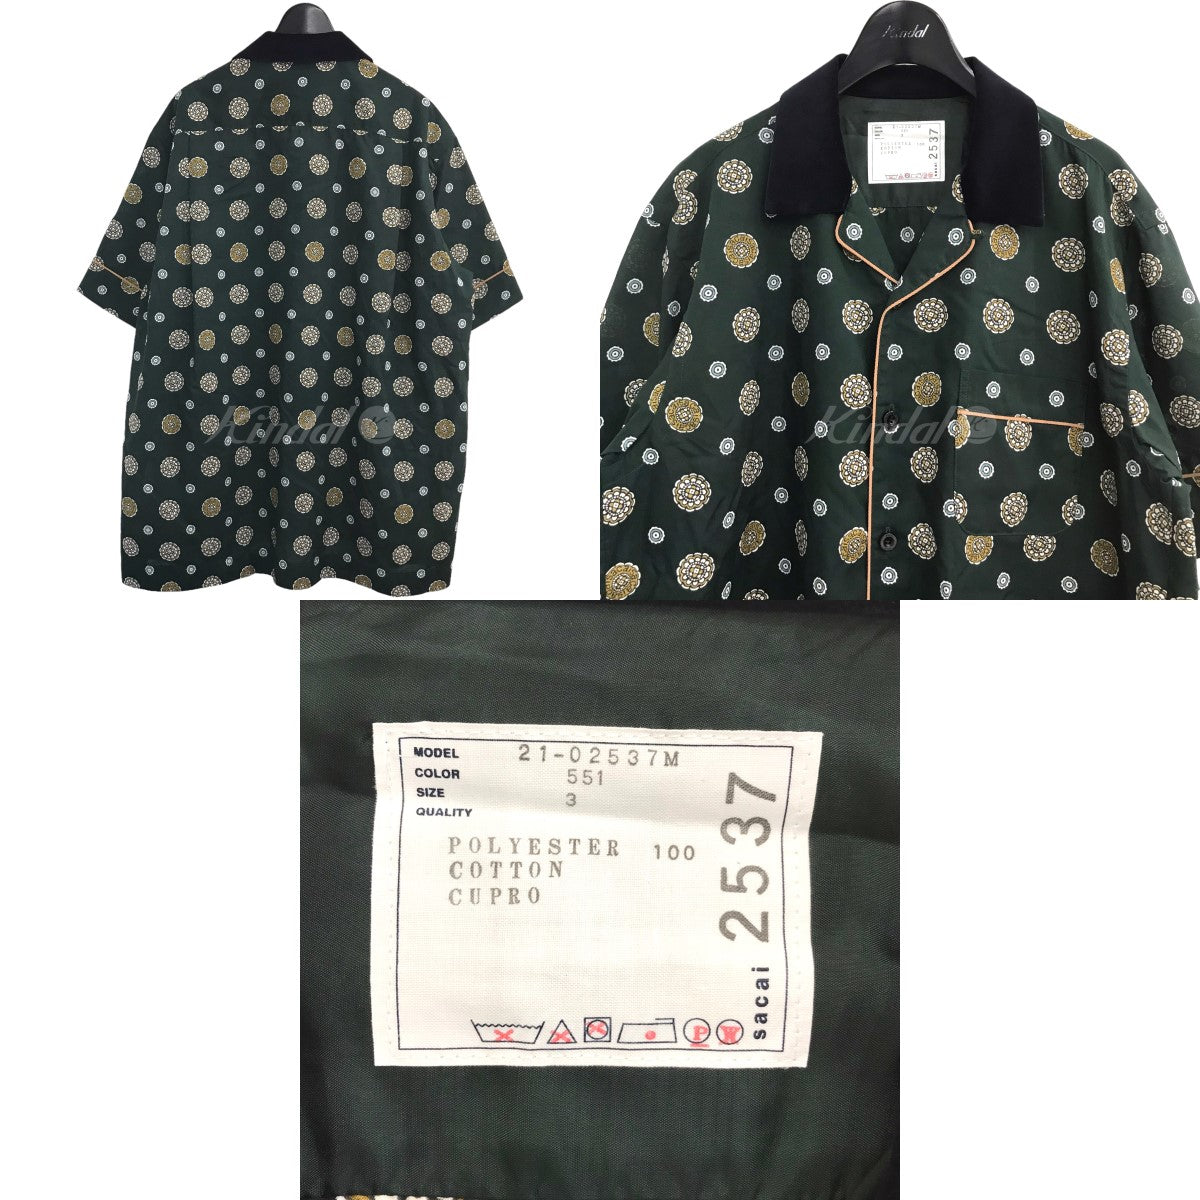 sacai(サカイ) 2021SS｢KOMON PRINT SHIRT｣小紋柄半袖シャツ 21 02537M